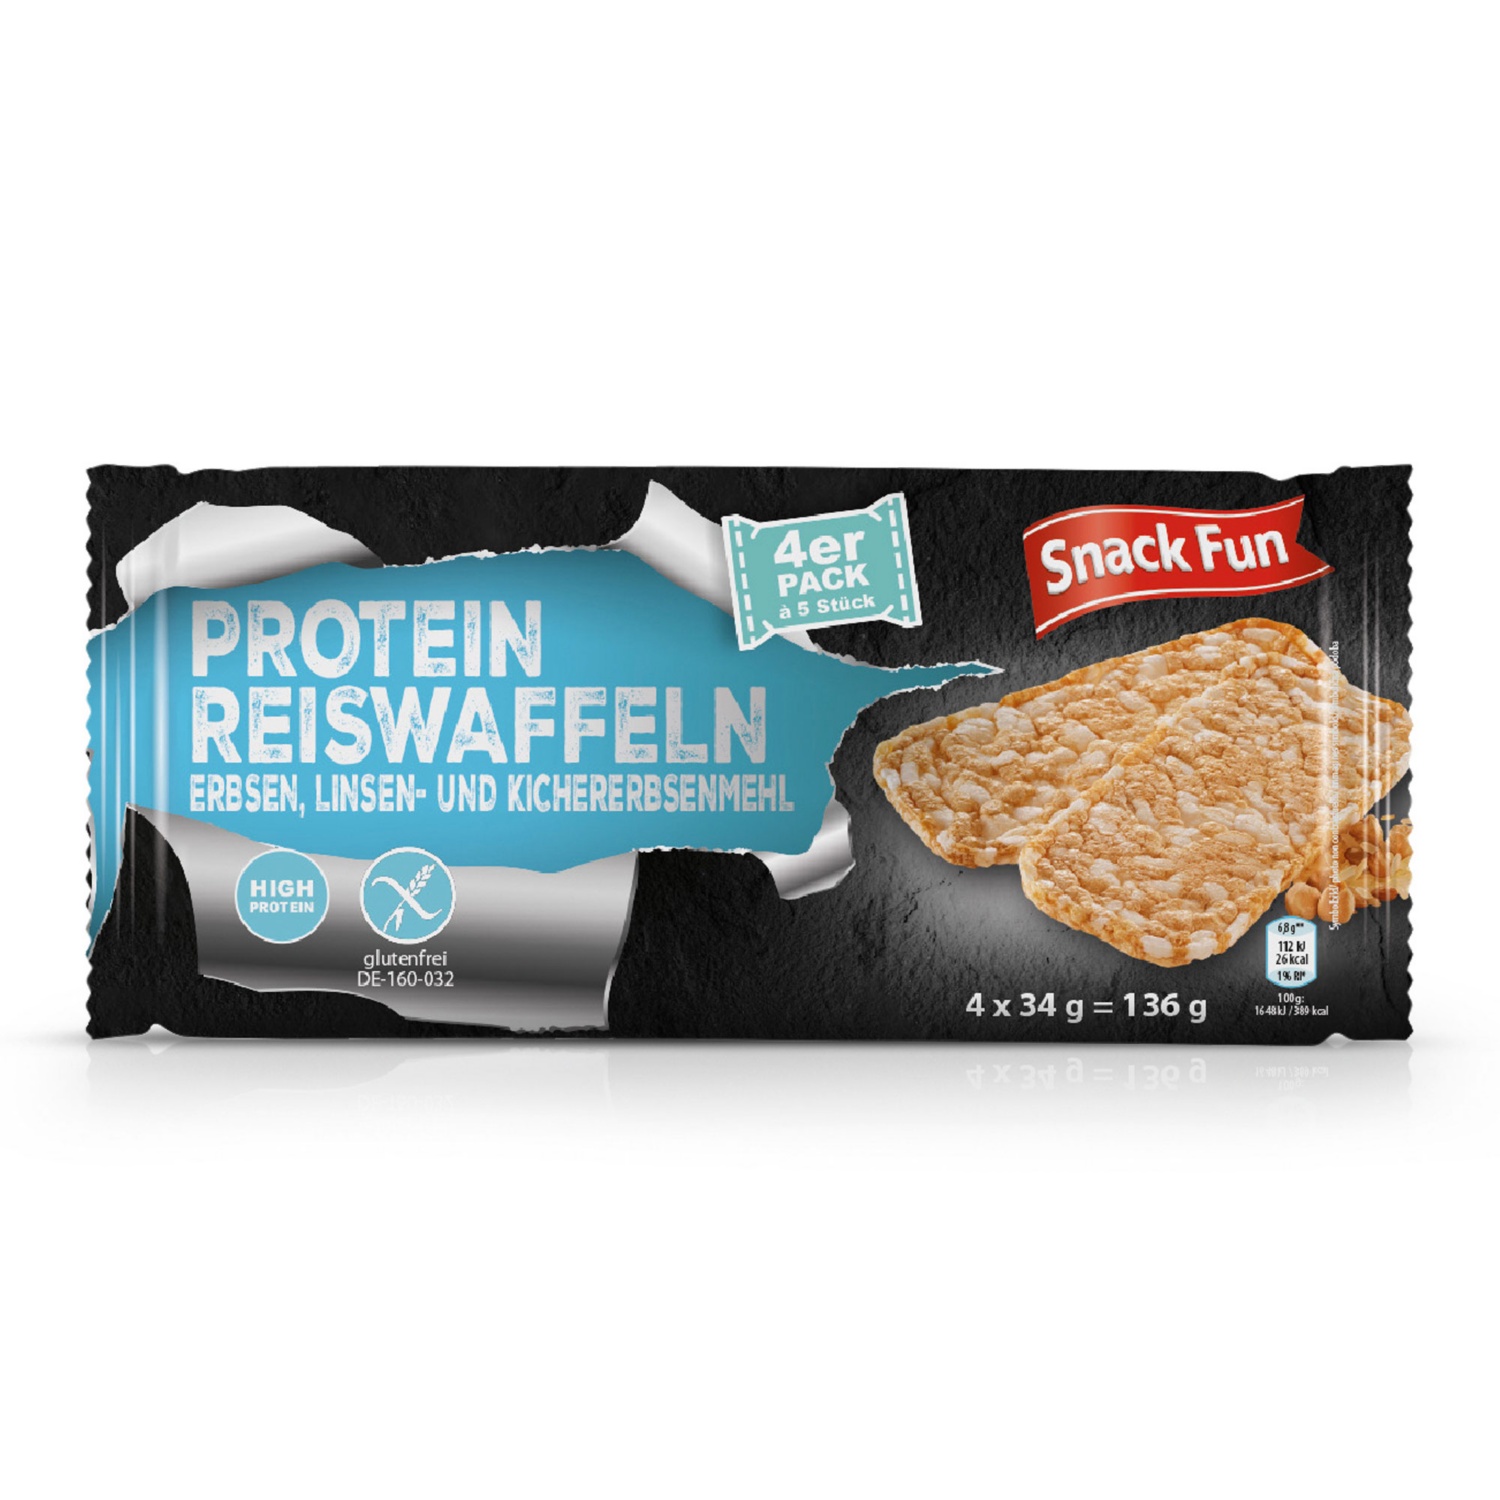 SNACK FUN Protein Reis-/Maiswaffeln, Kichererbsen